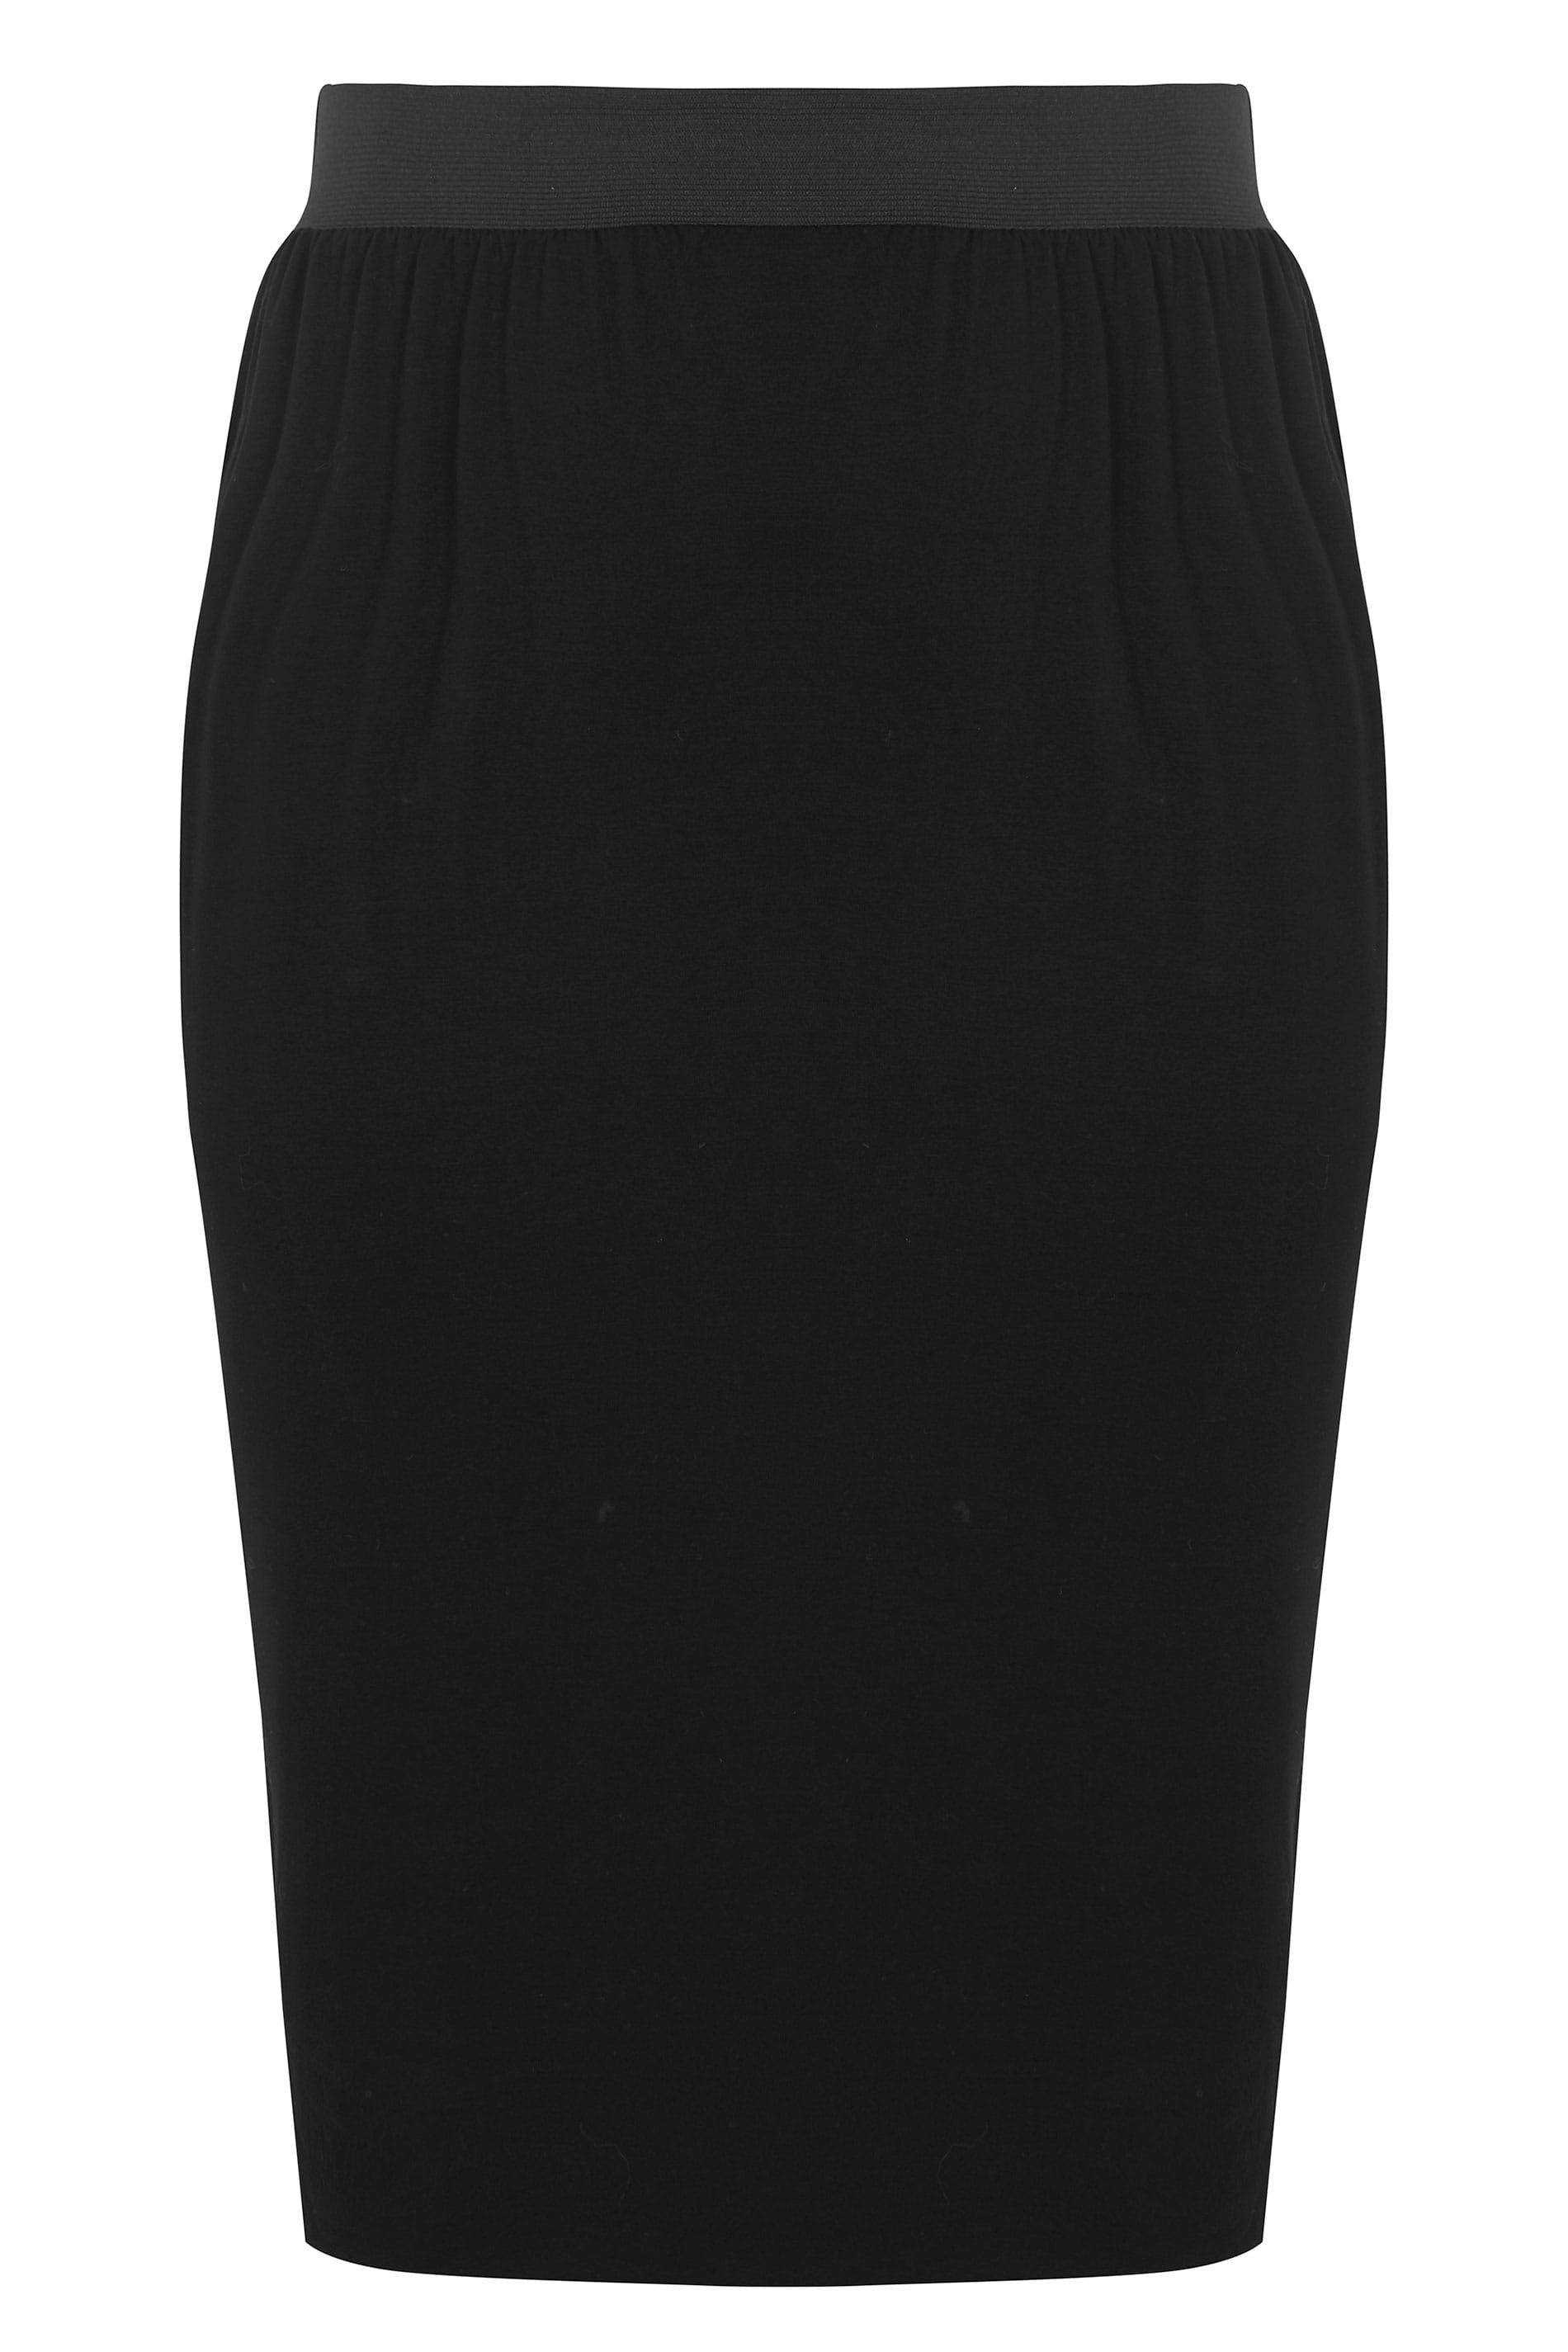 Black Pencil Skirt, Plus size 16 to 36